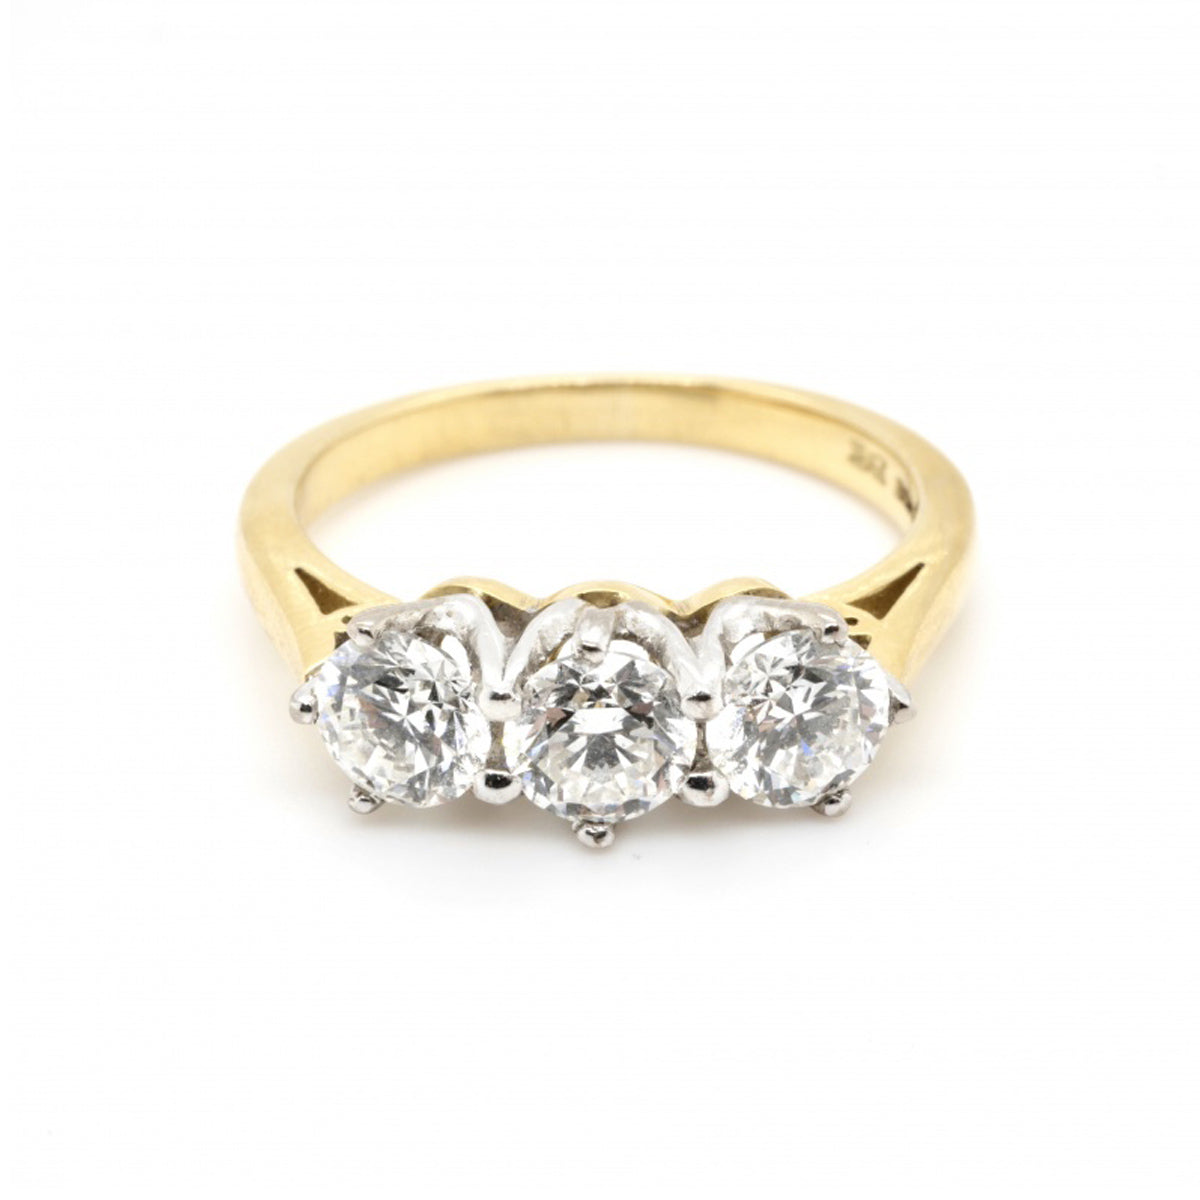 18ct Yellow Gold 3-Stone 1.22ct Diamond Ring - Size N